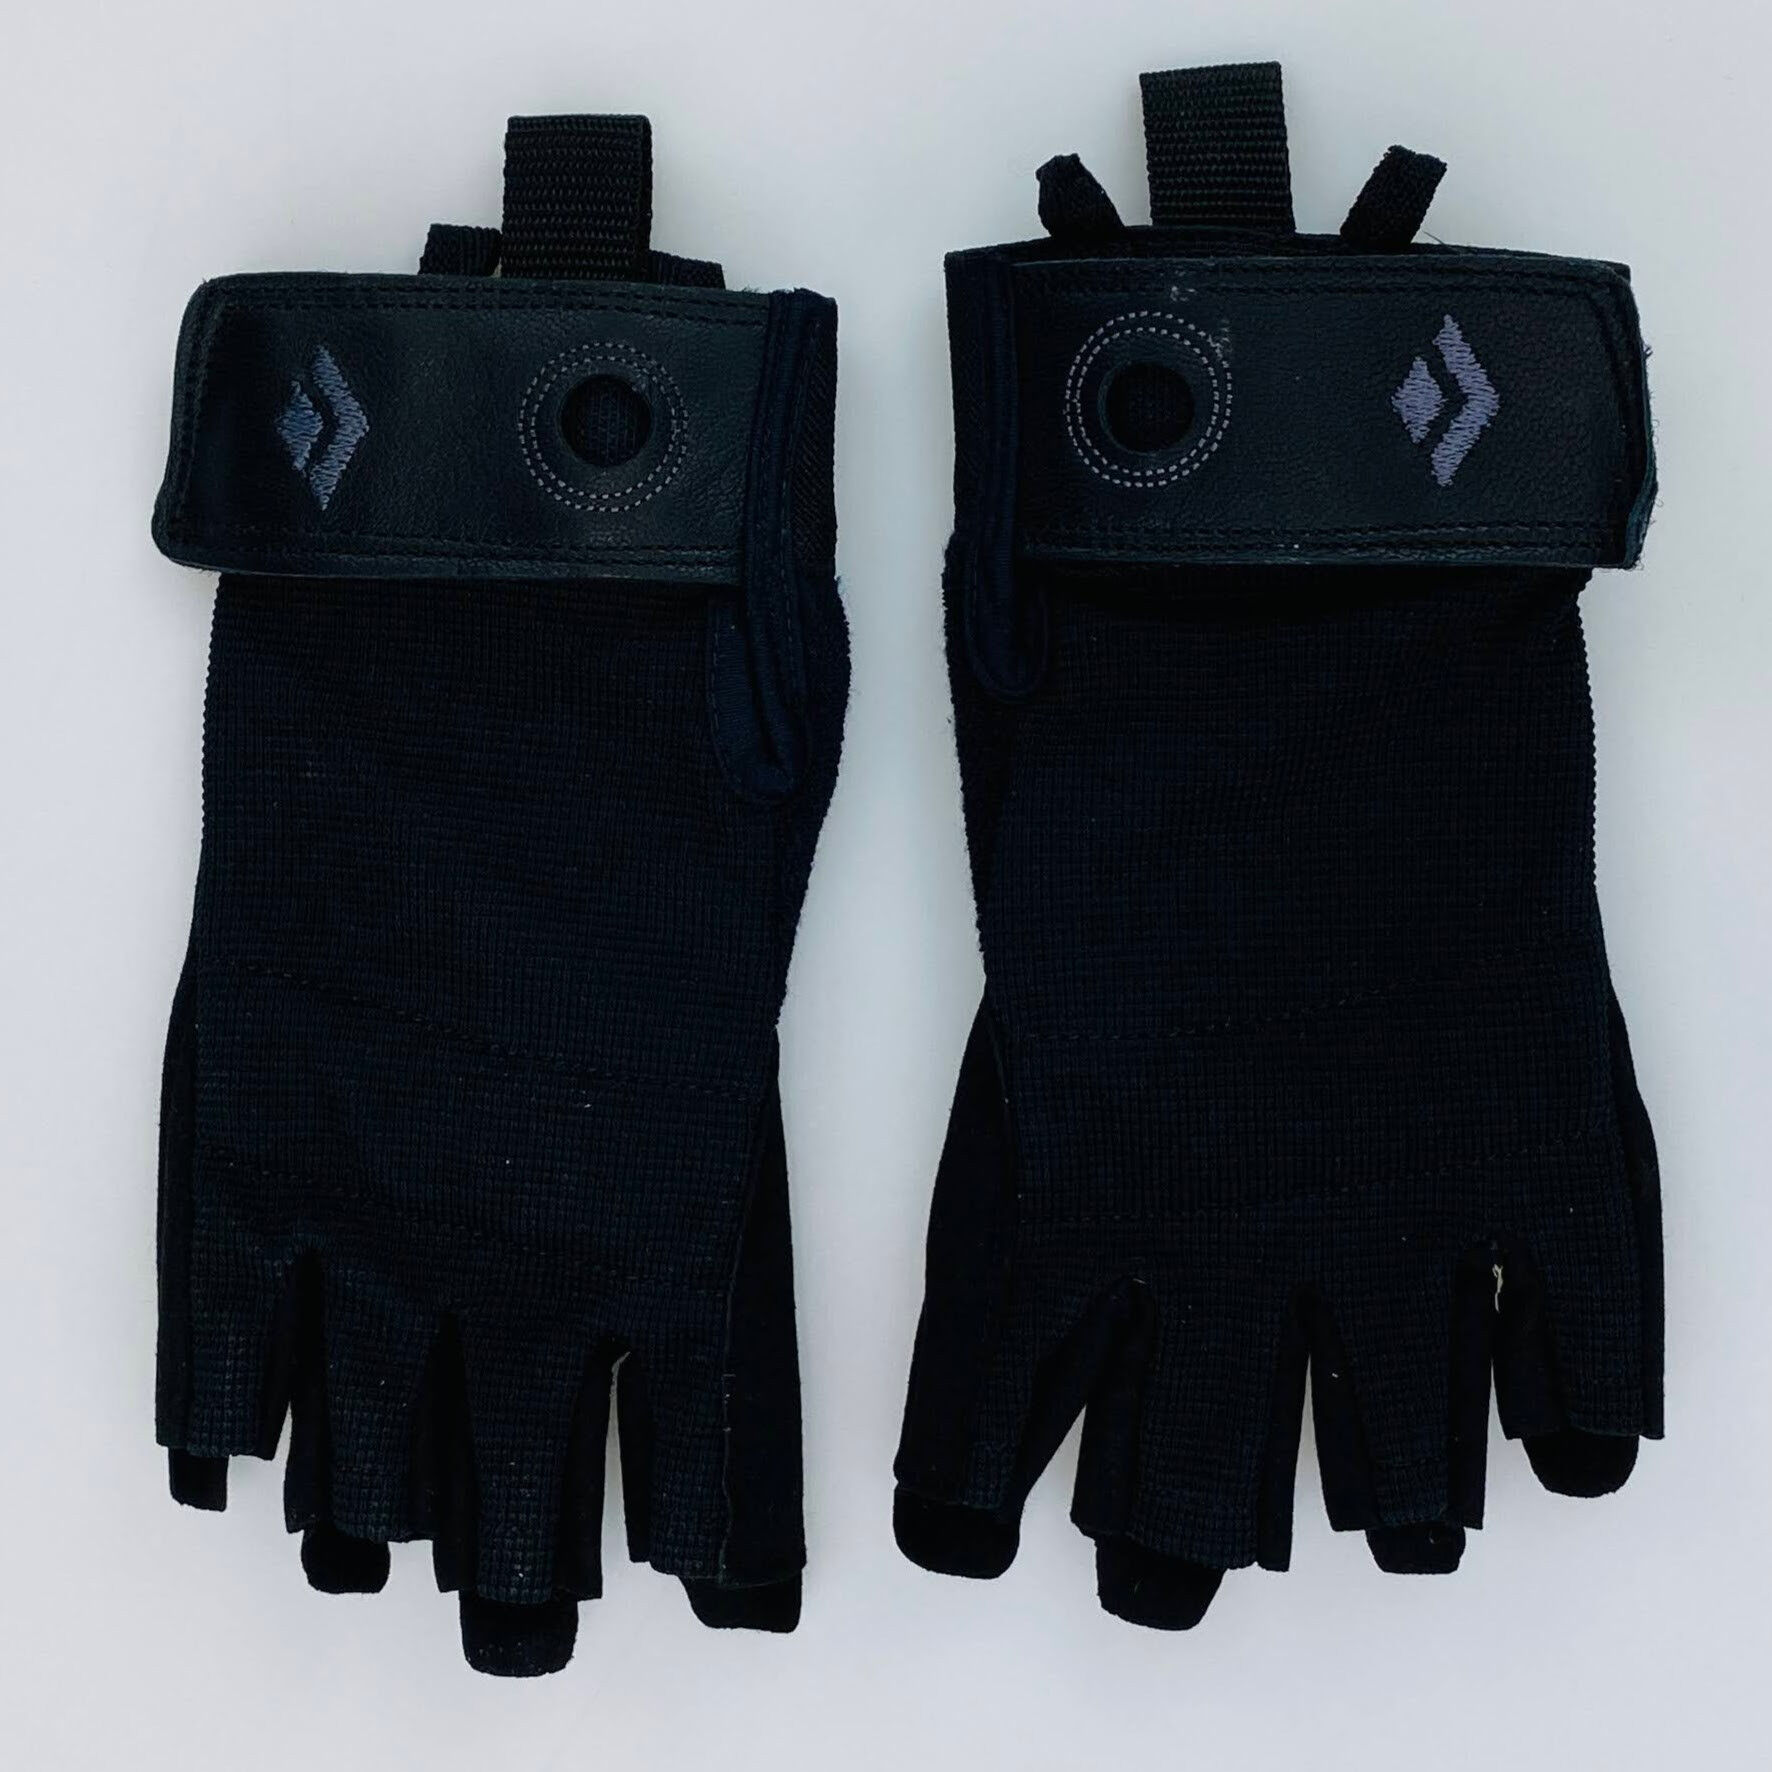 Black Diamond Crag Half Finger Gloves - Guanti di seconda mano - Nero - S | Hardloop